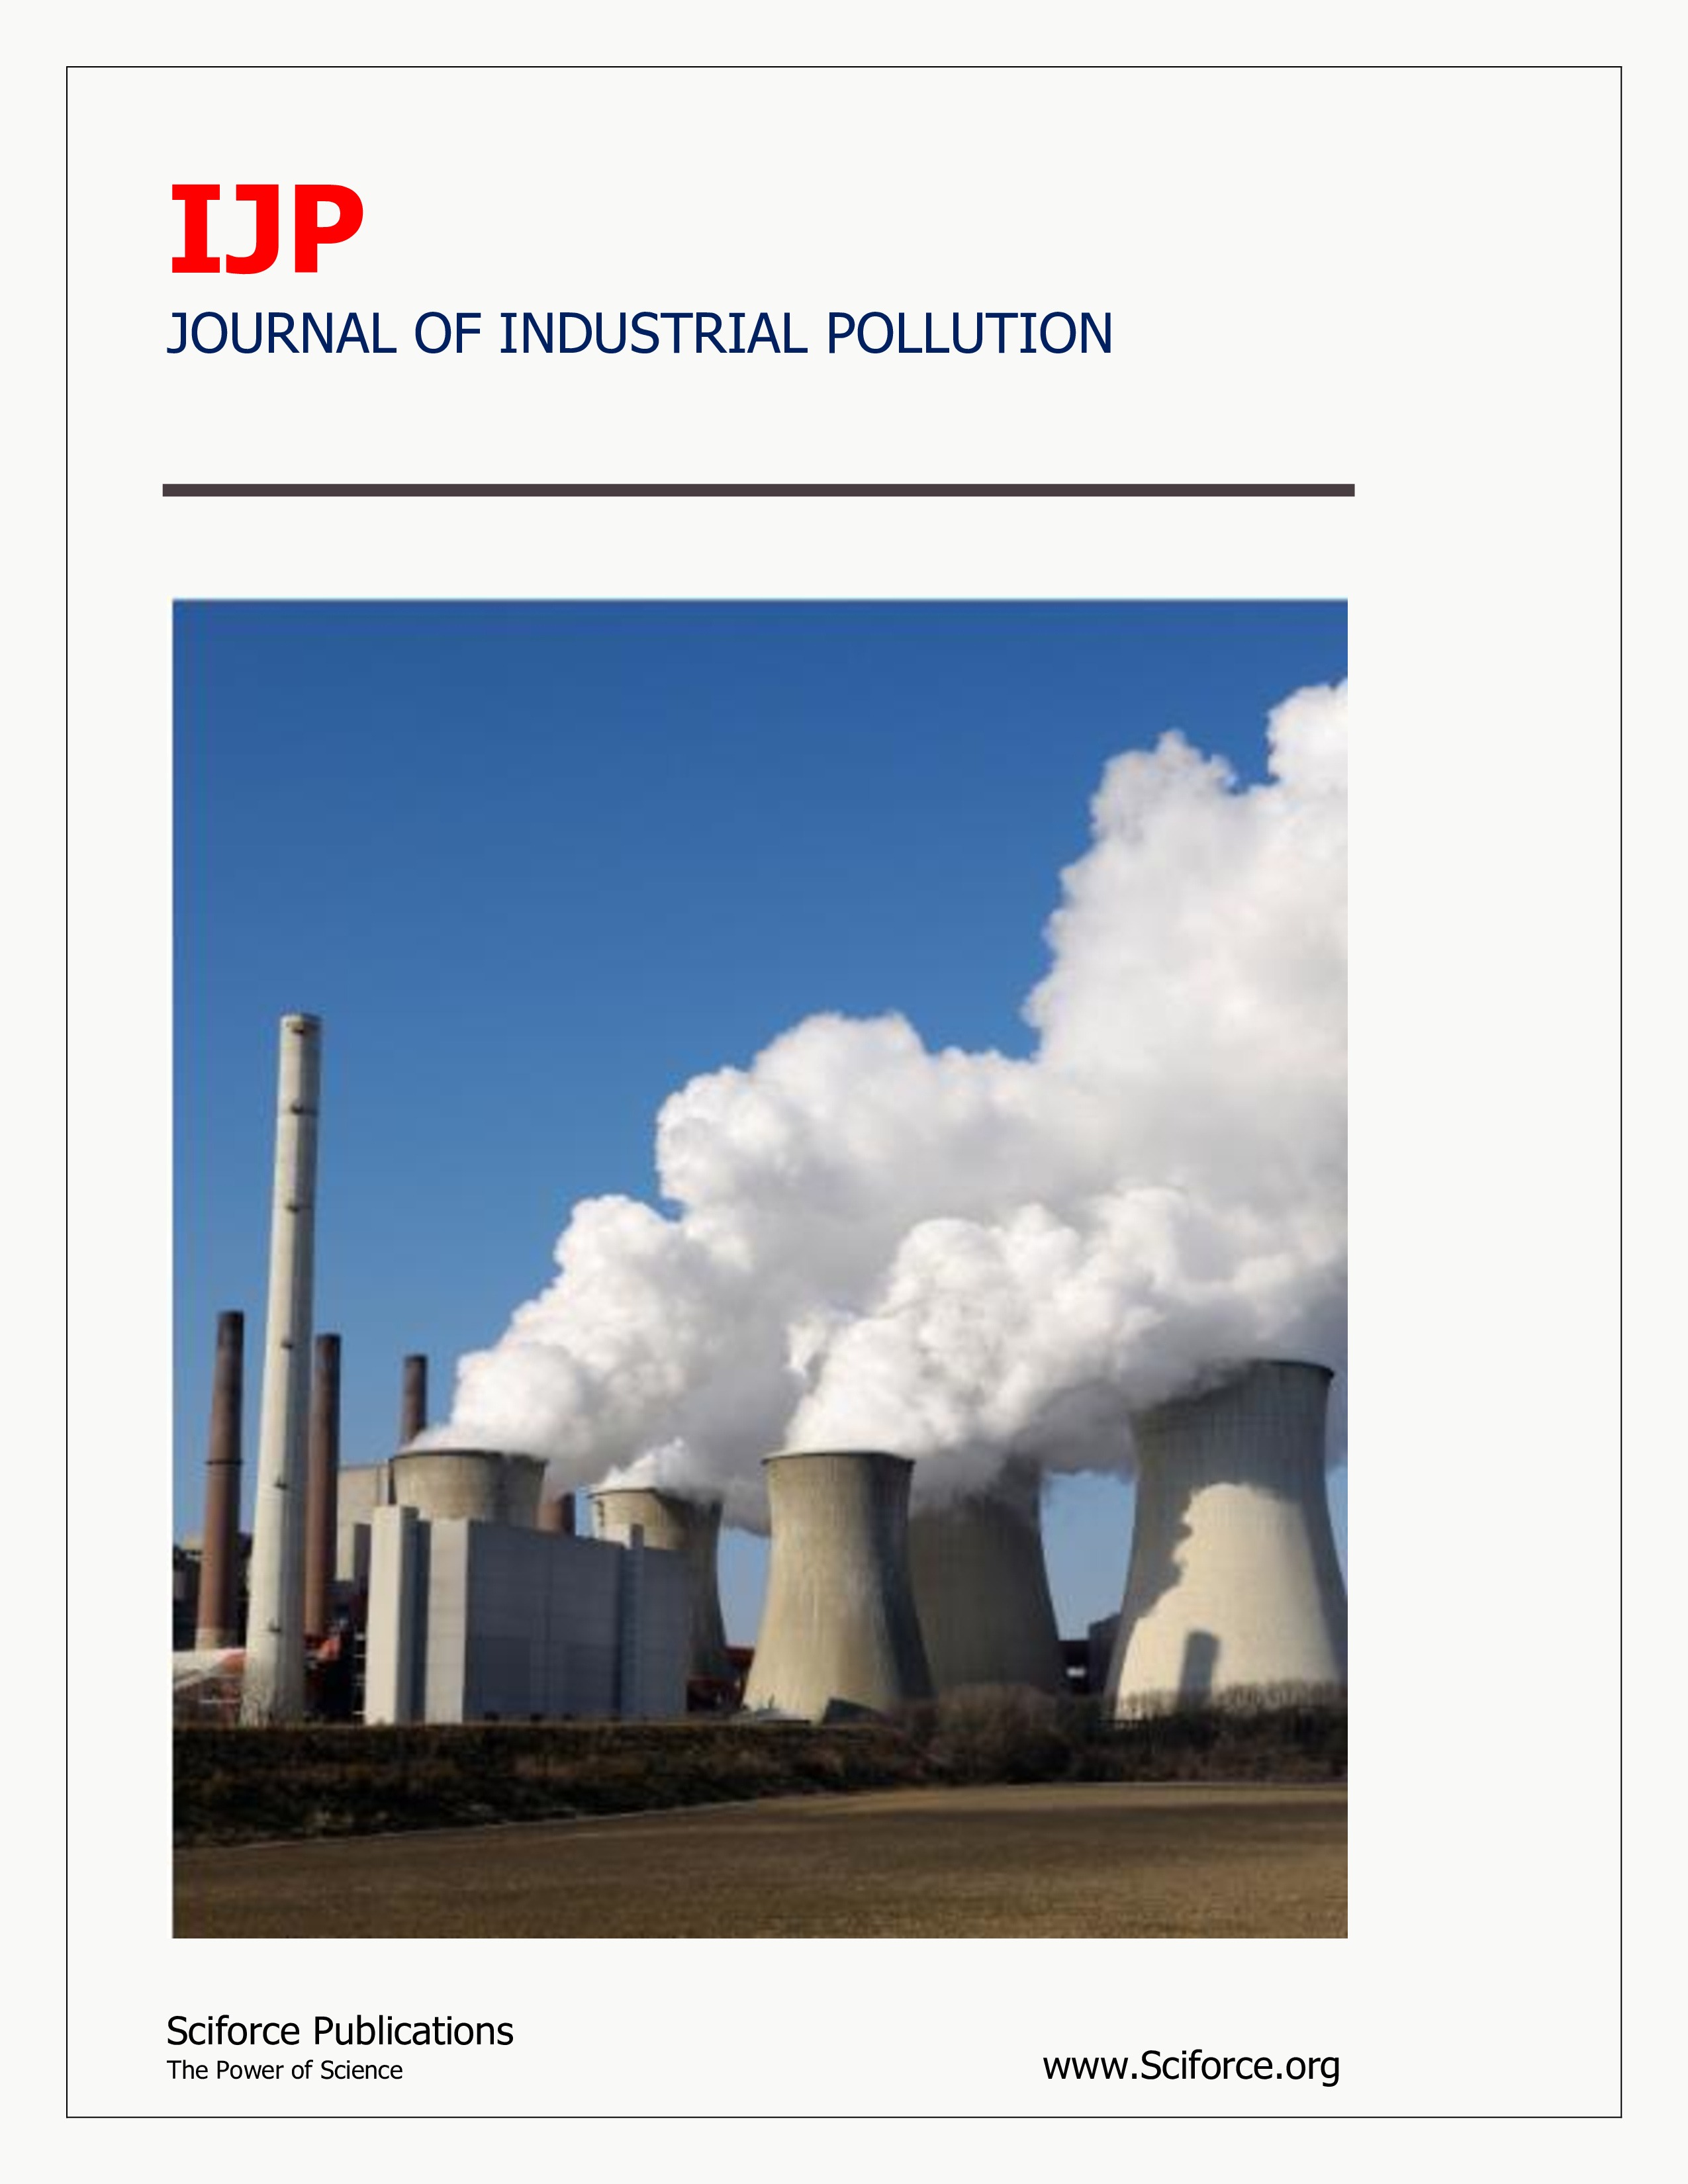 International Journal of Industrial Pollution